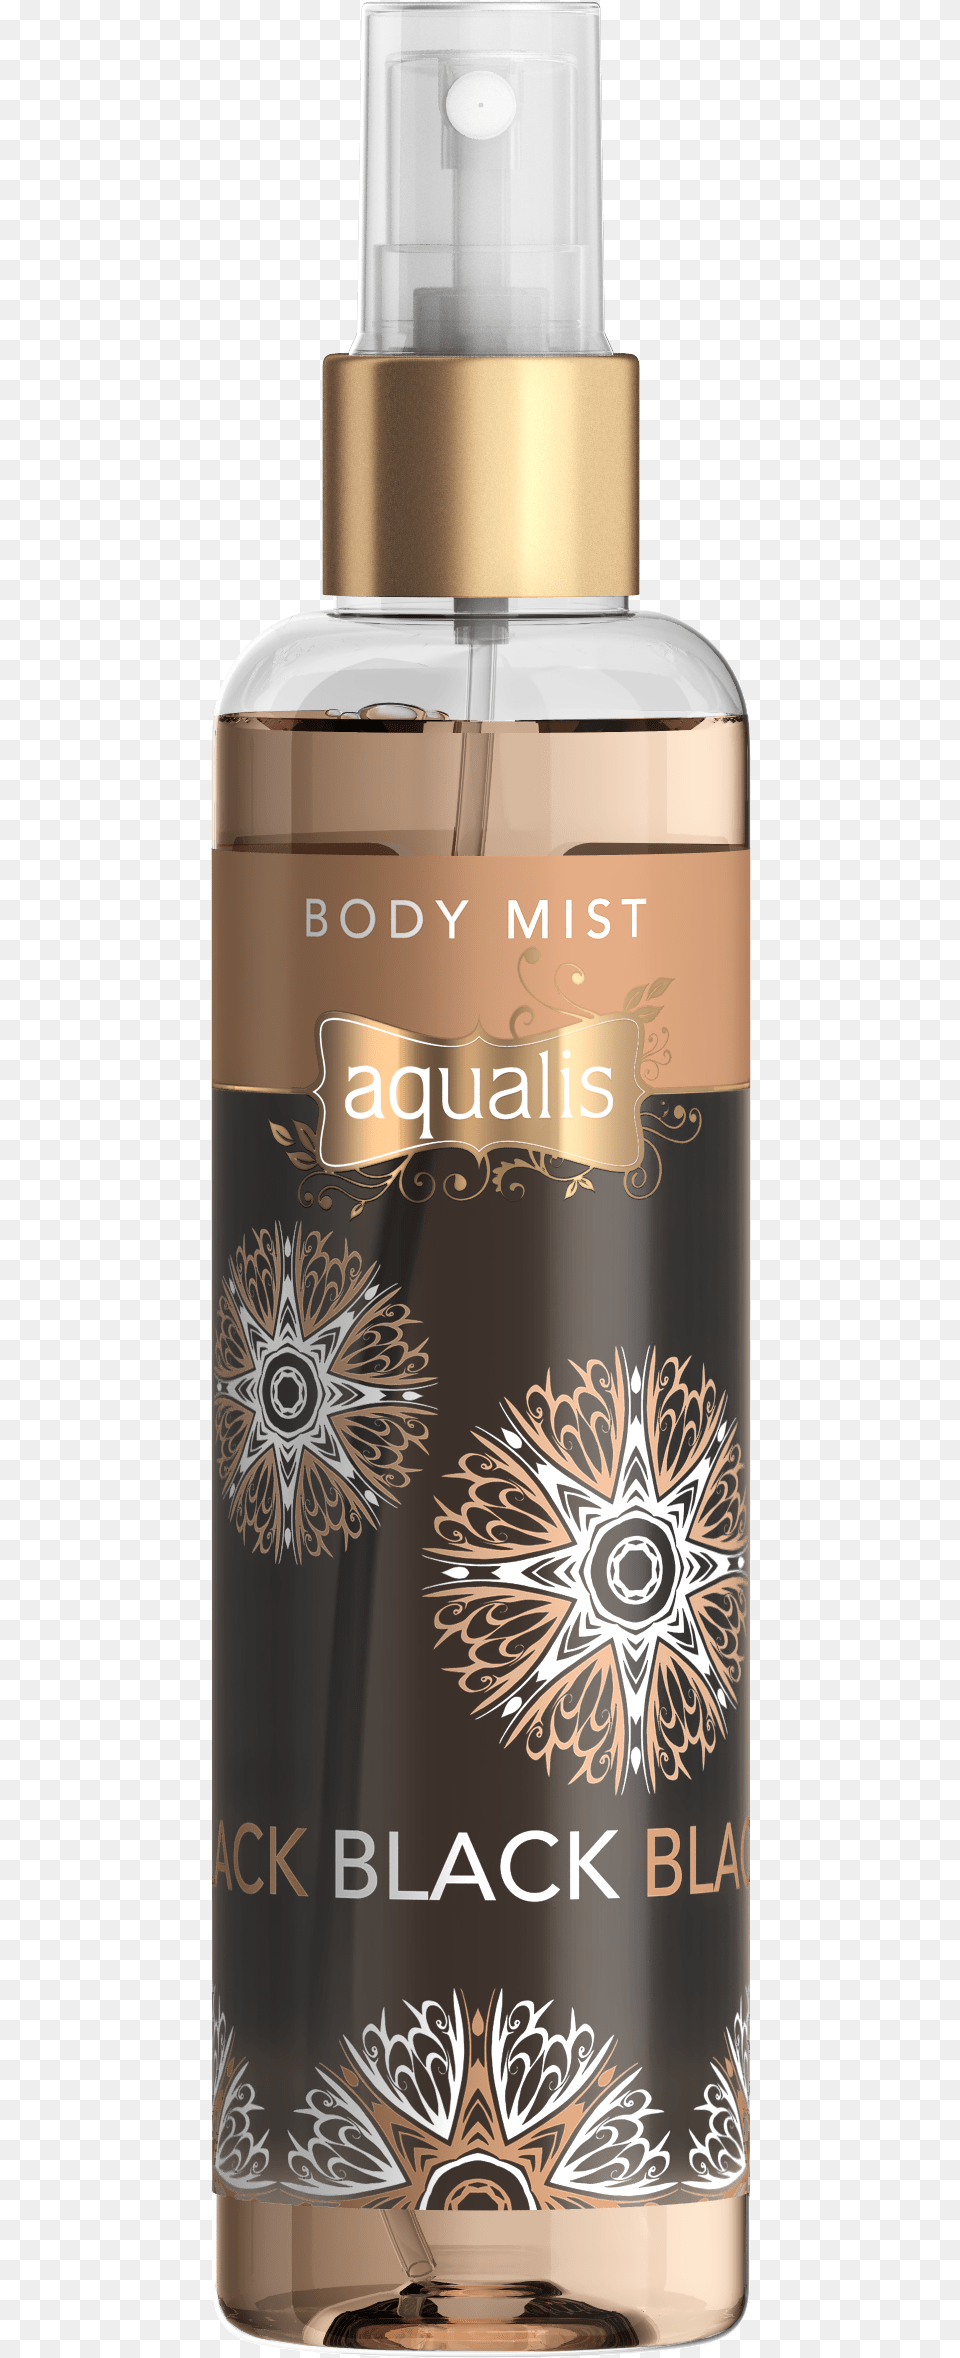 Aqualis Body Mist, Bottle, Cosmetics, Perfume, Lotion Png Image